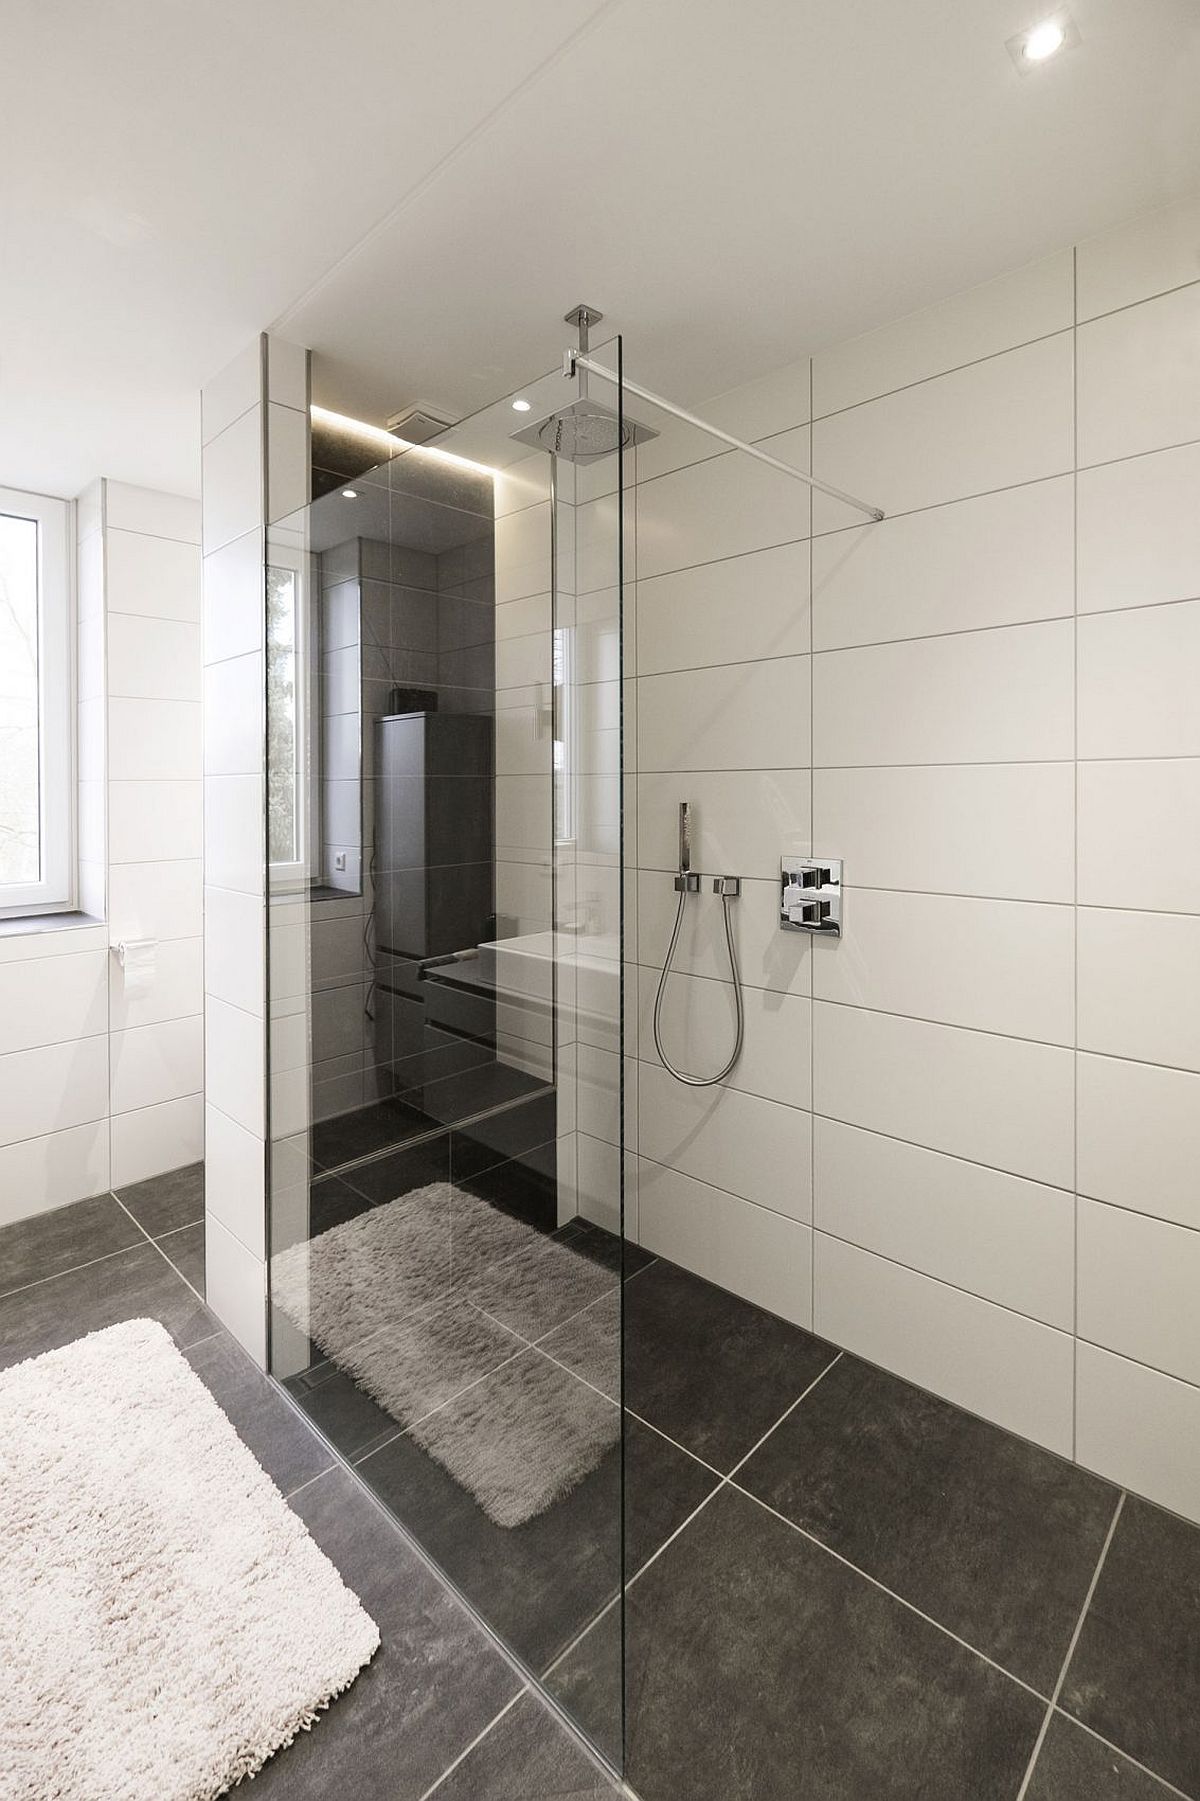 Contemporary bathroom with glass shower area